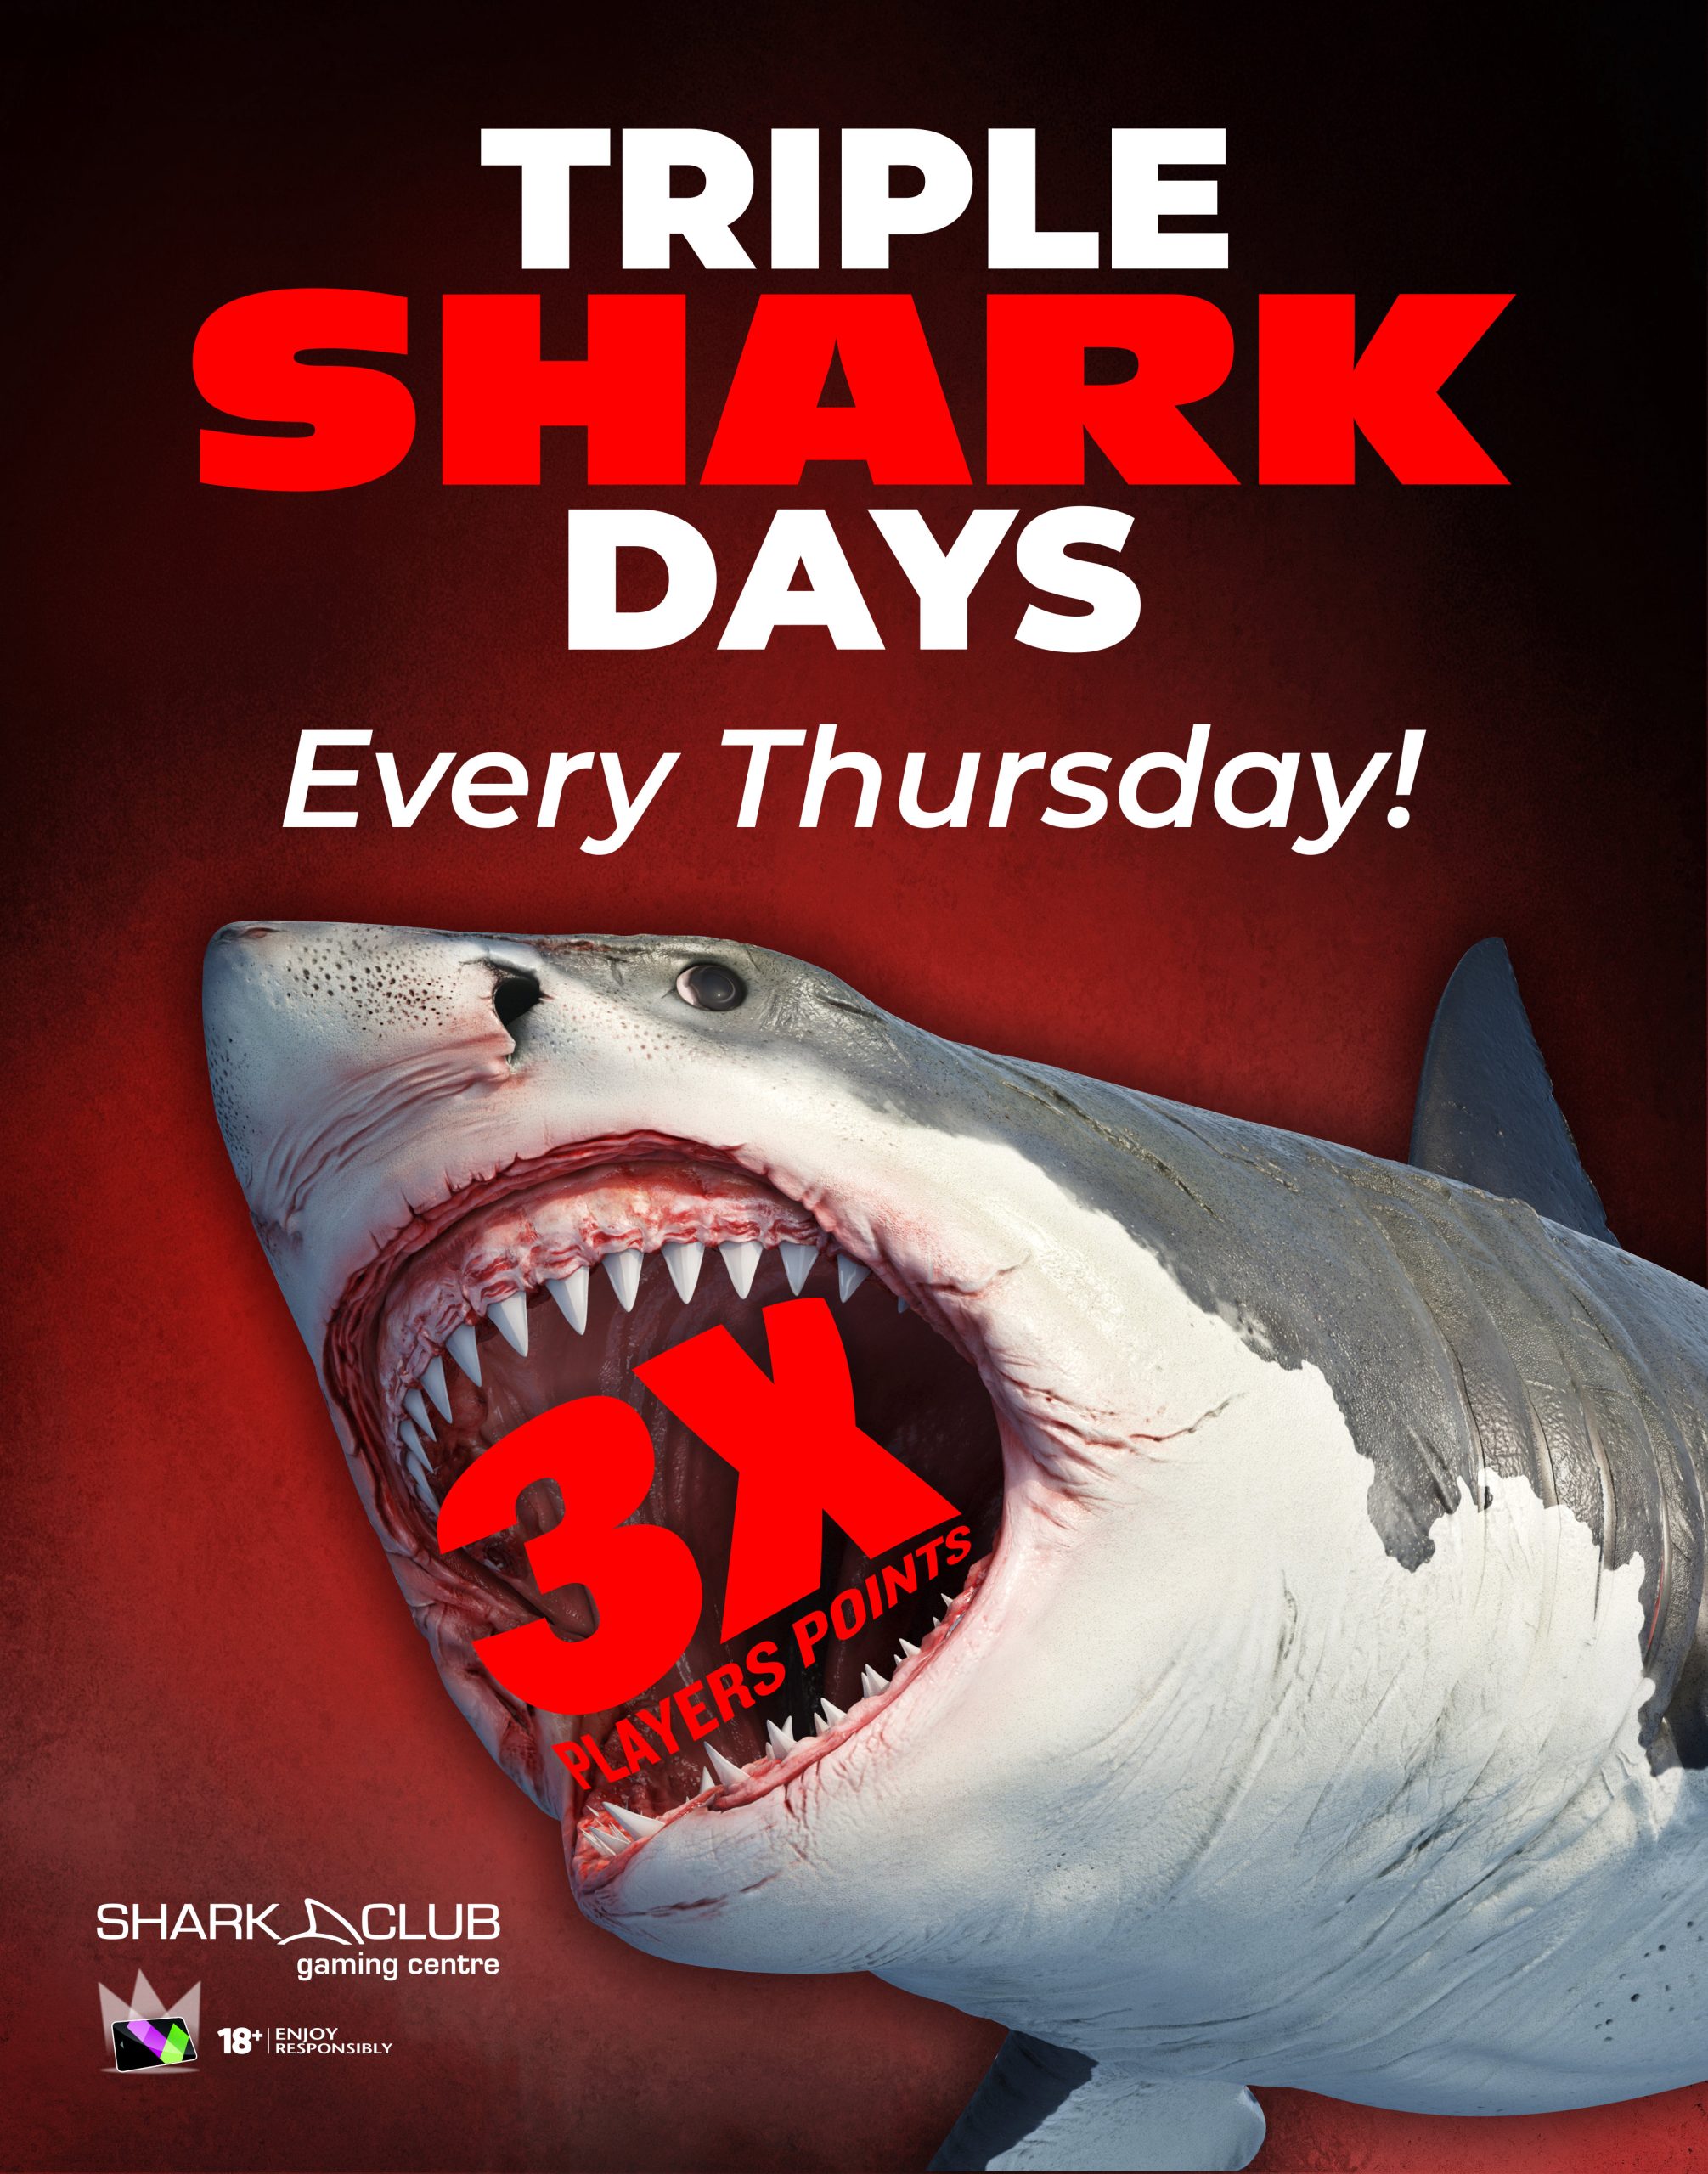 Triple Shark Days 3X player points every Thursday!